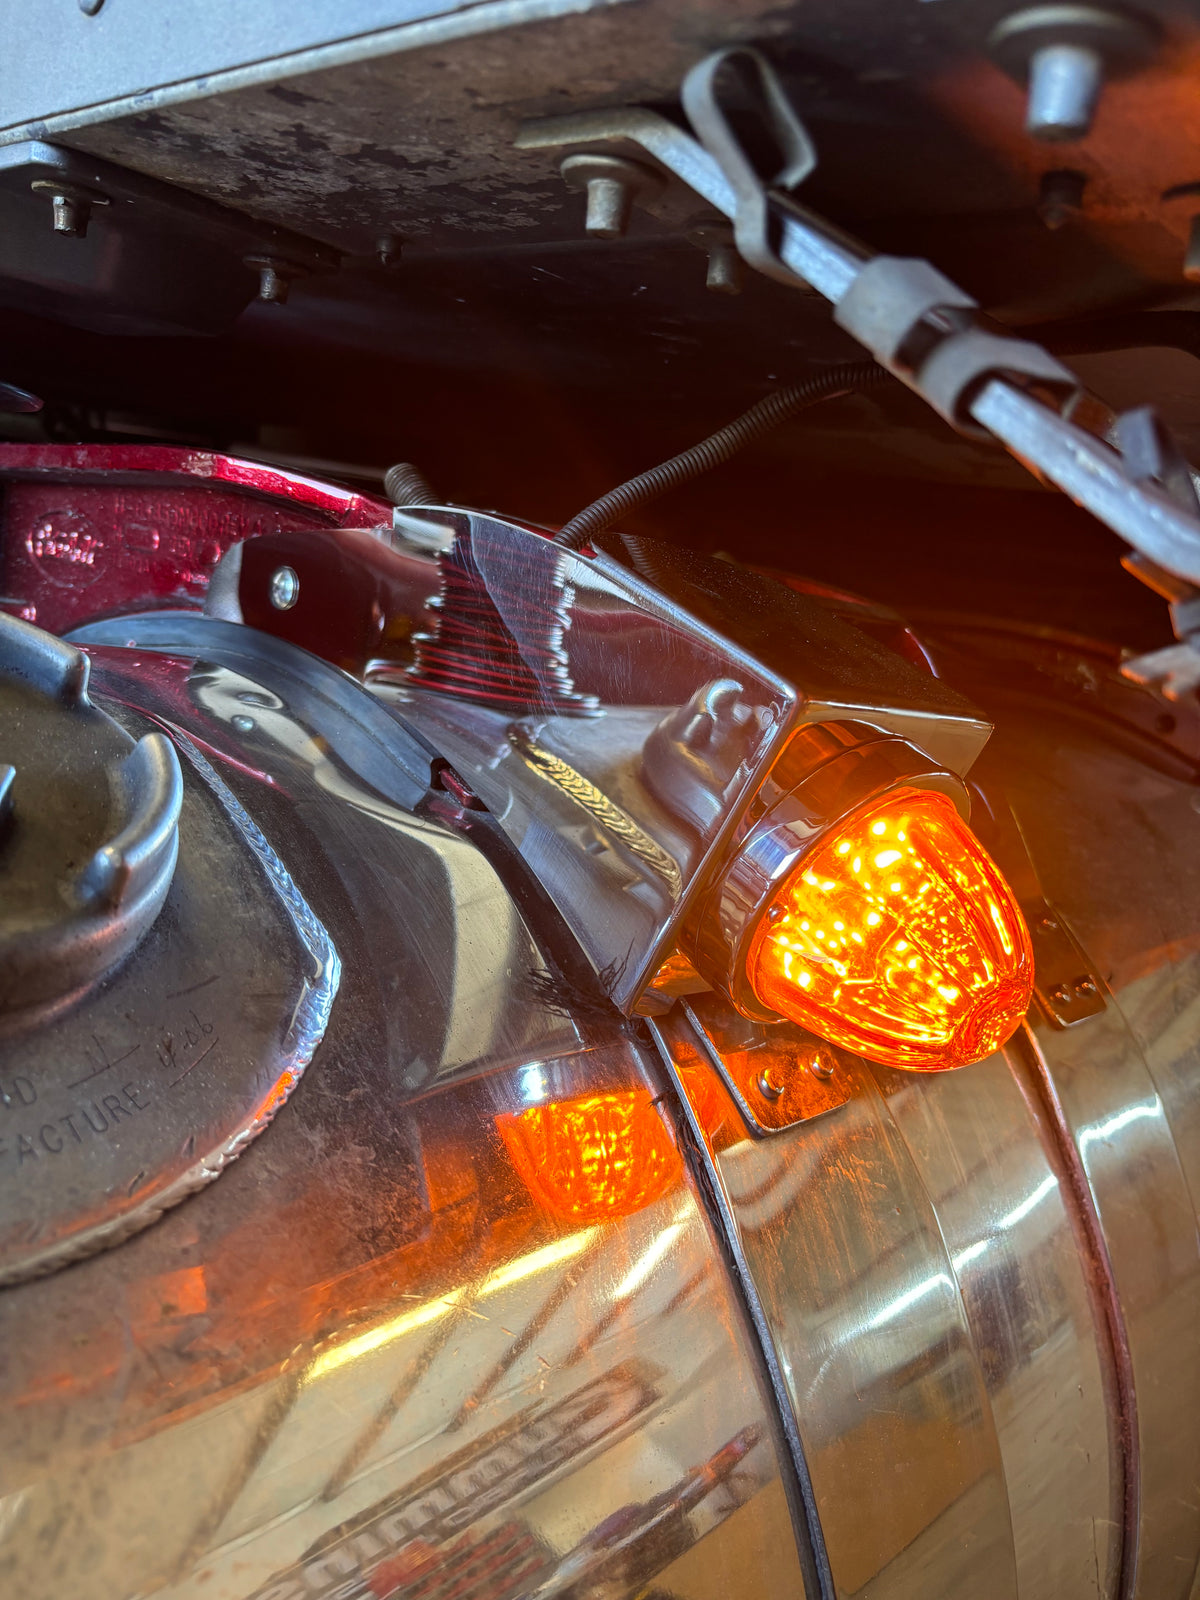 Peterbilt Fuel Tank Strap Cover Pair Fits Peterbilt 379, 386, 388 & 389 | Watermelon Lights Not Included